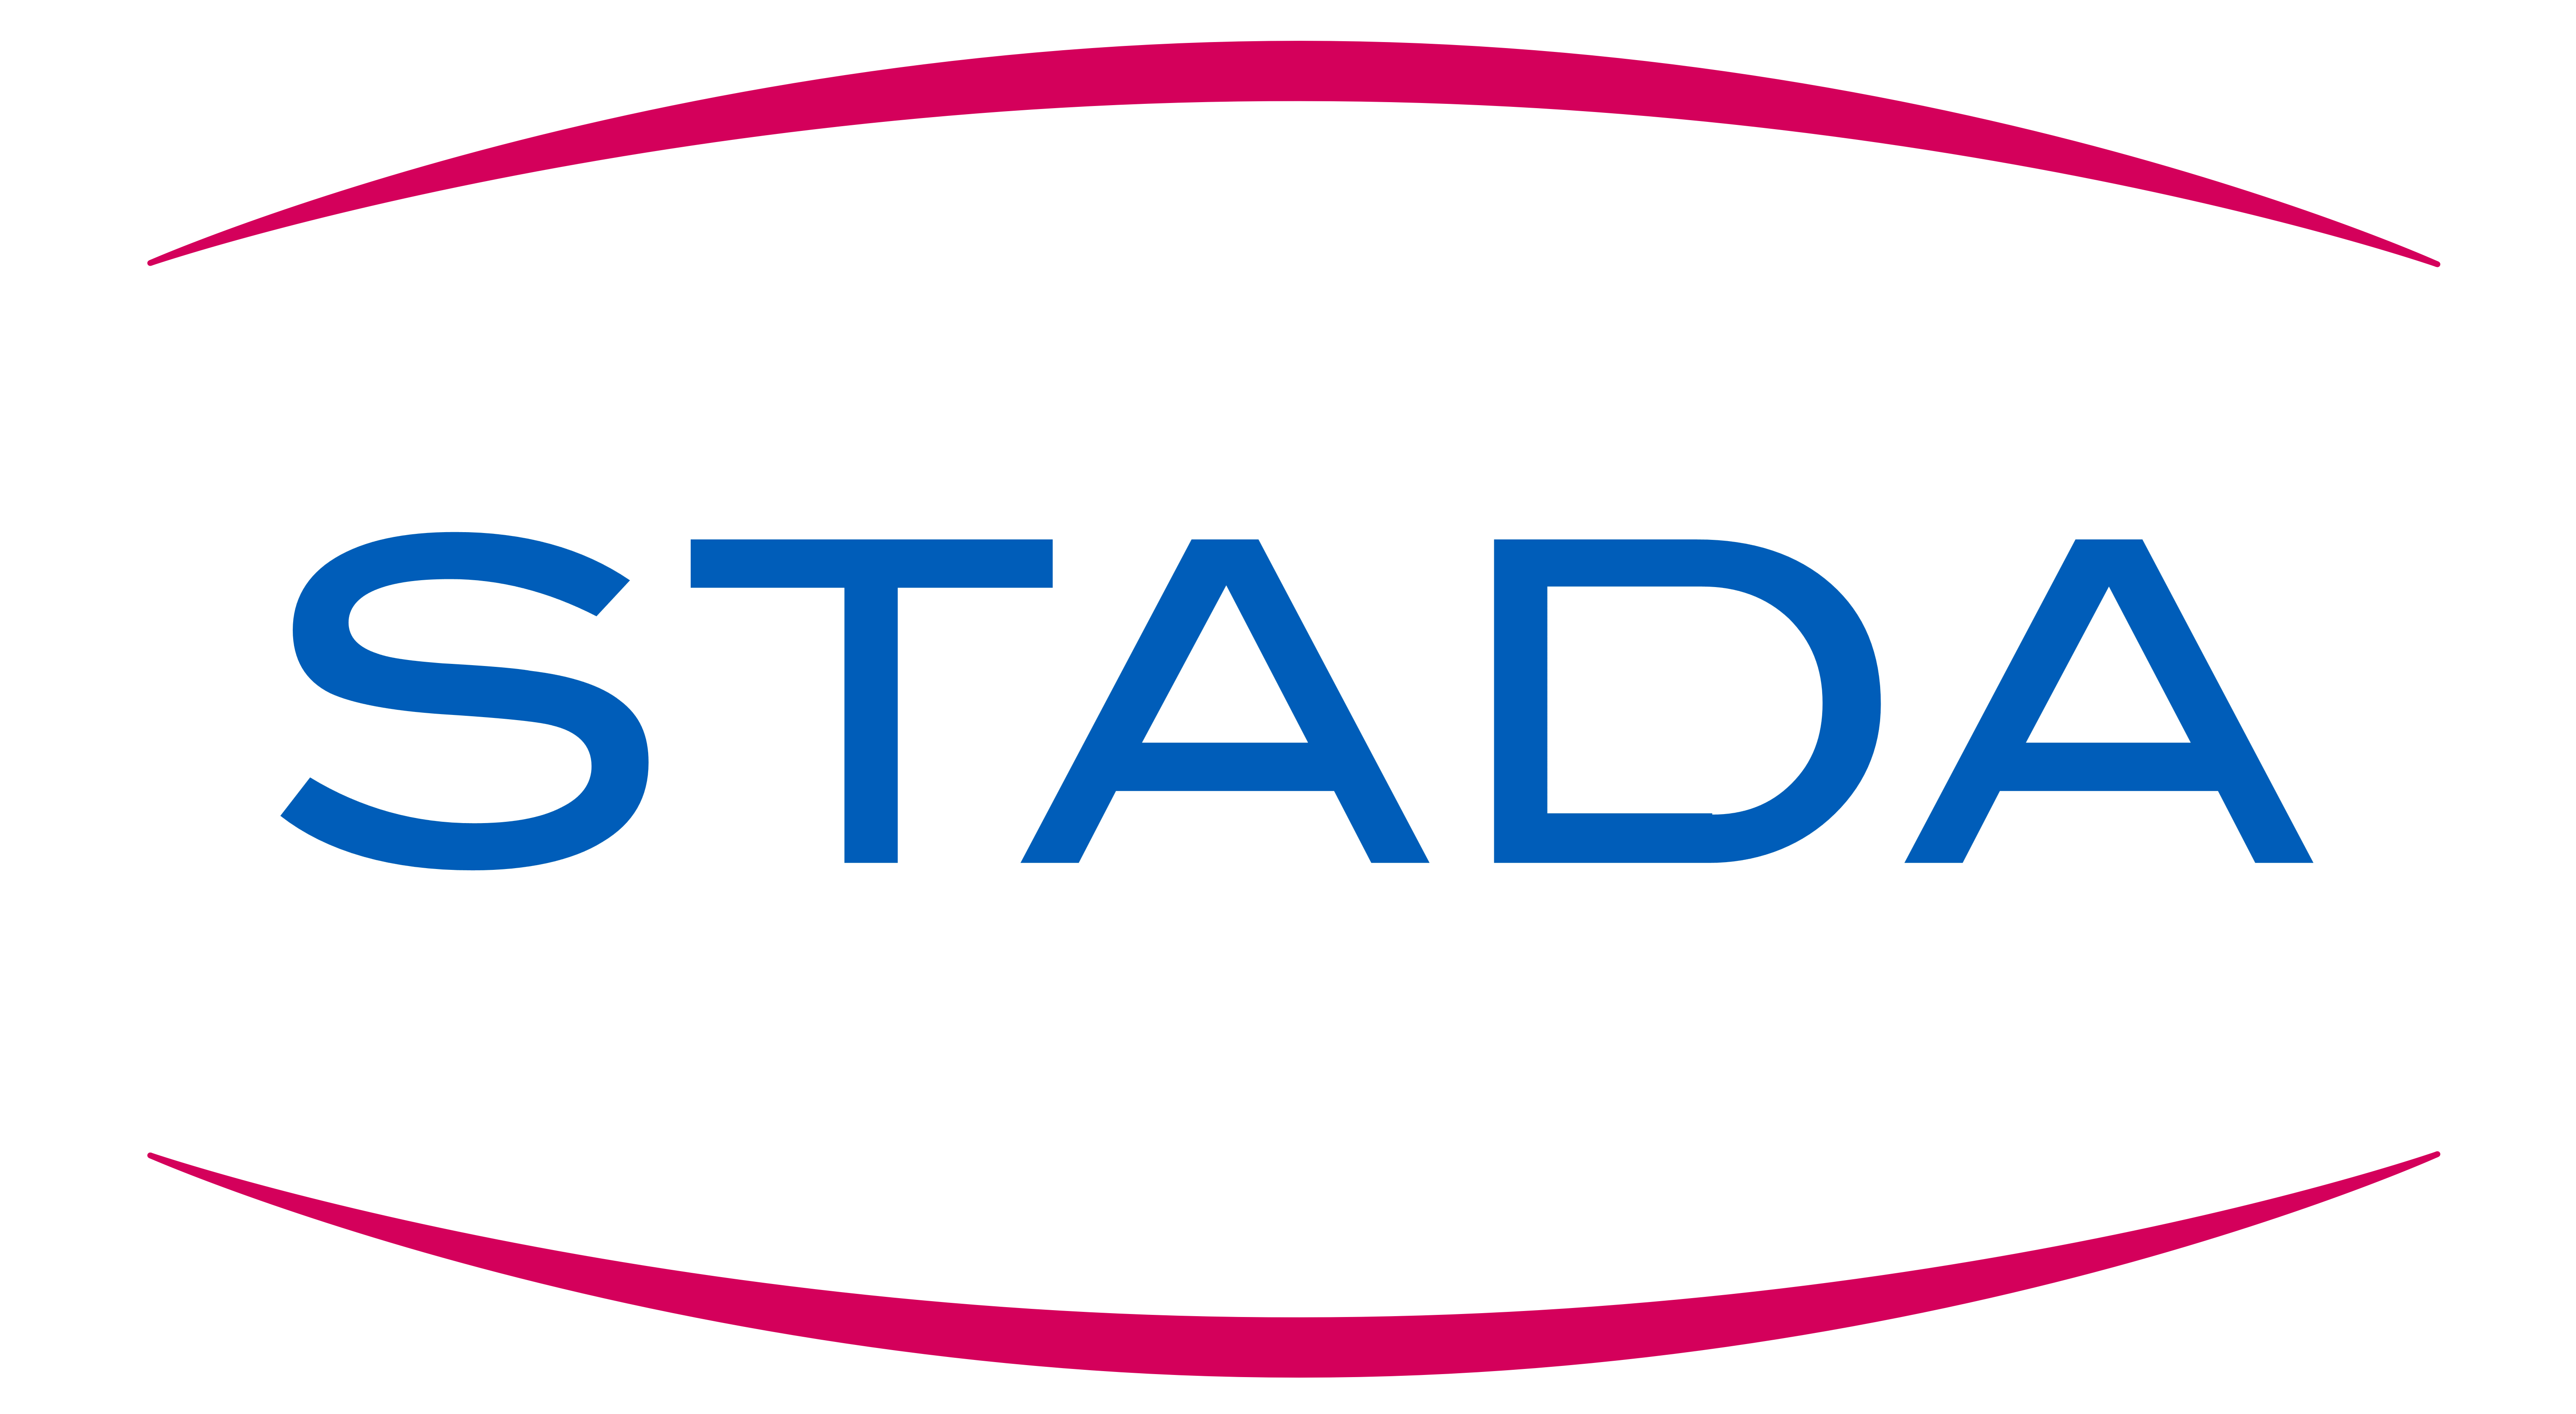 Stada logo, logotype